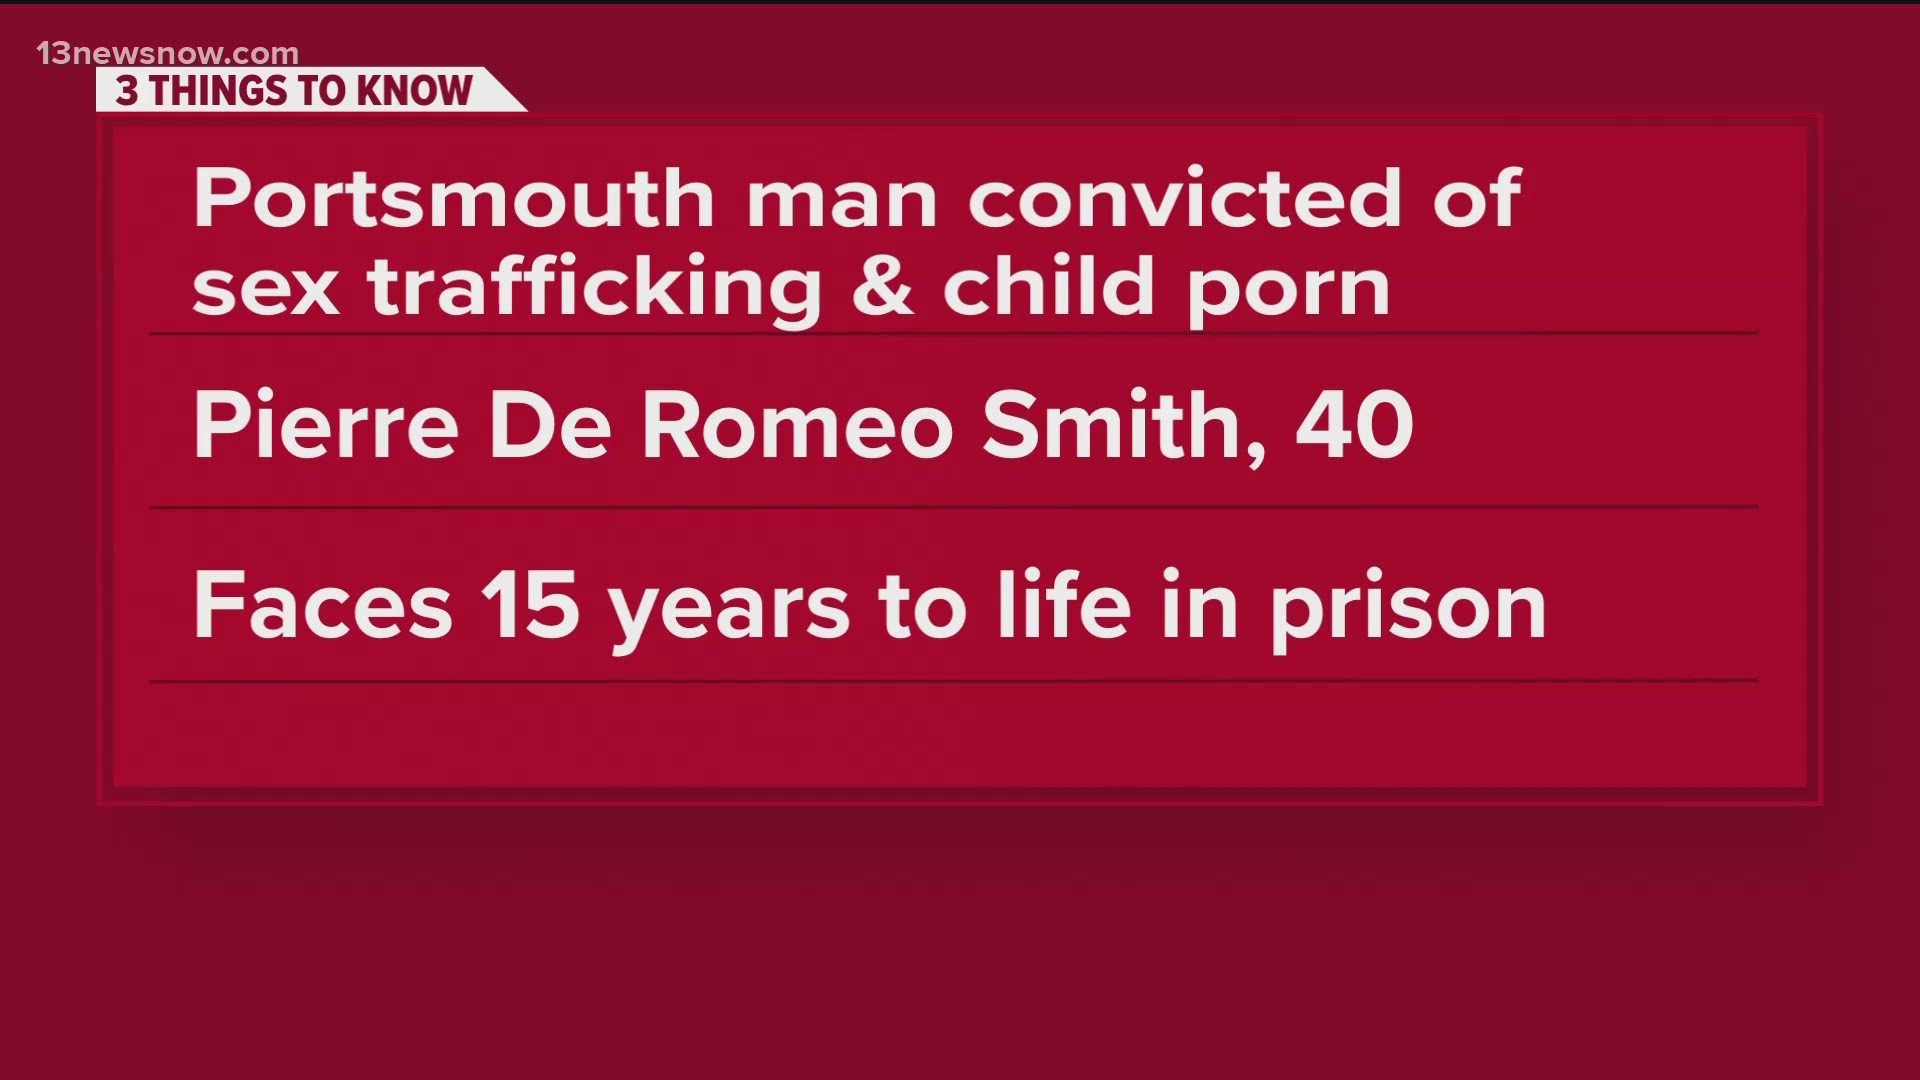 DOJ convicts Portsmouth man of sex trafficking, child pornography |  13newsnow.com